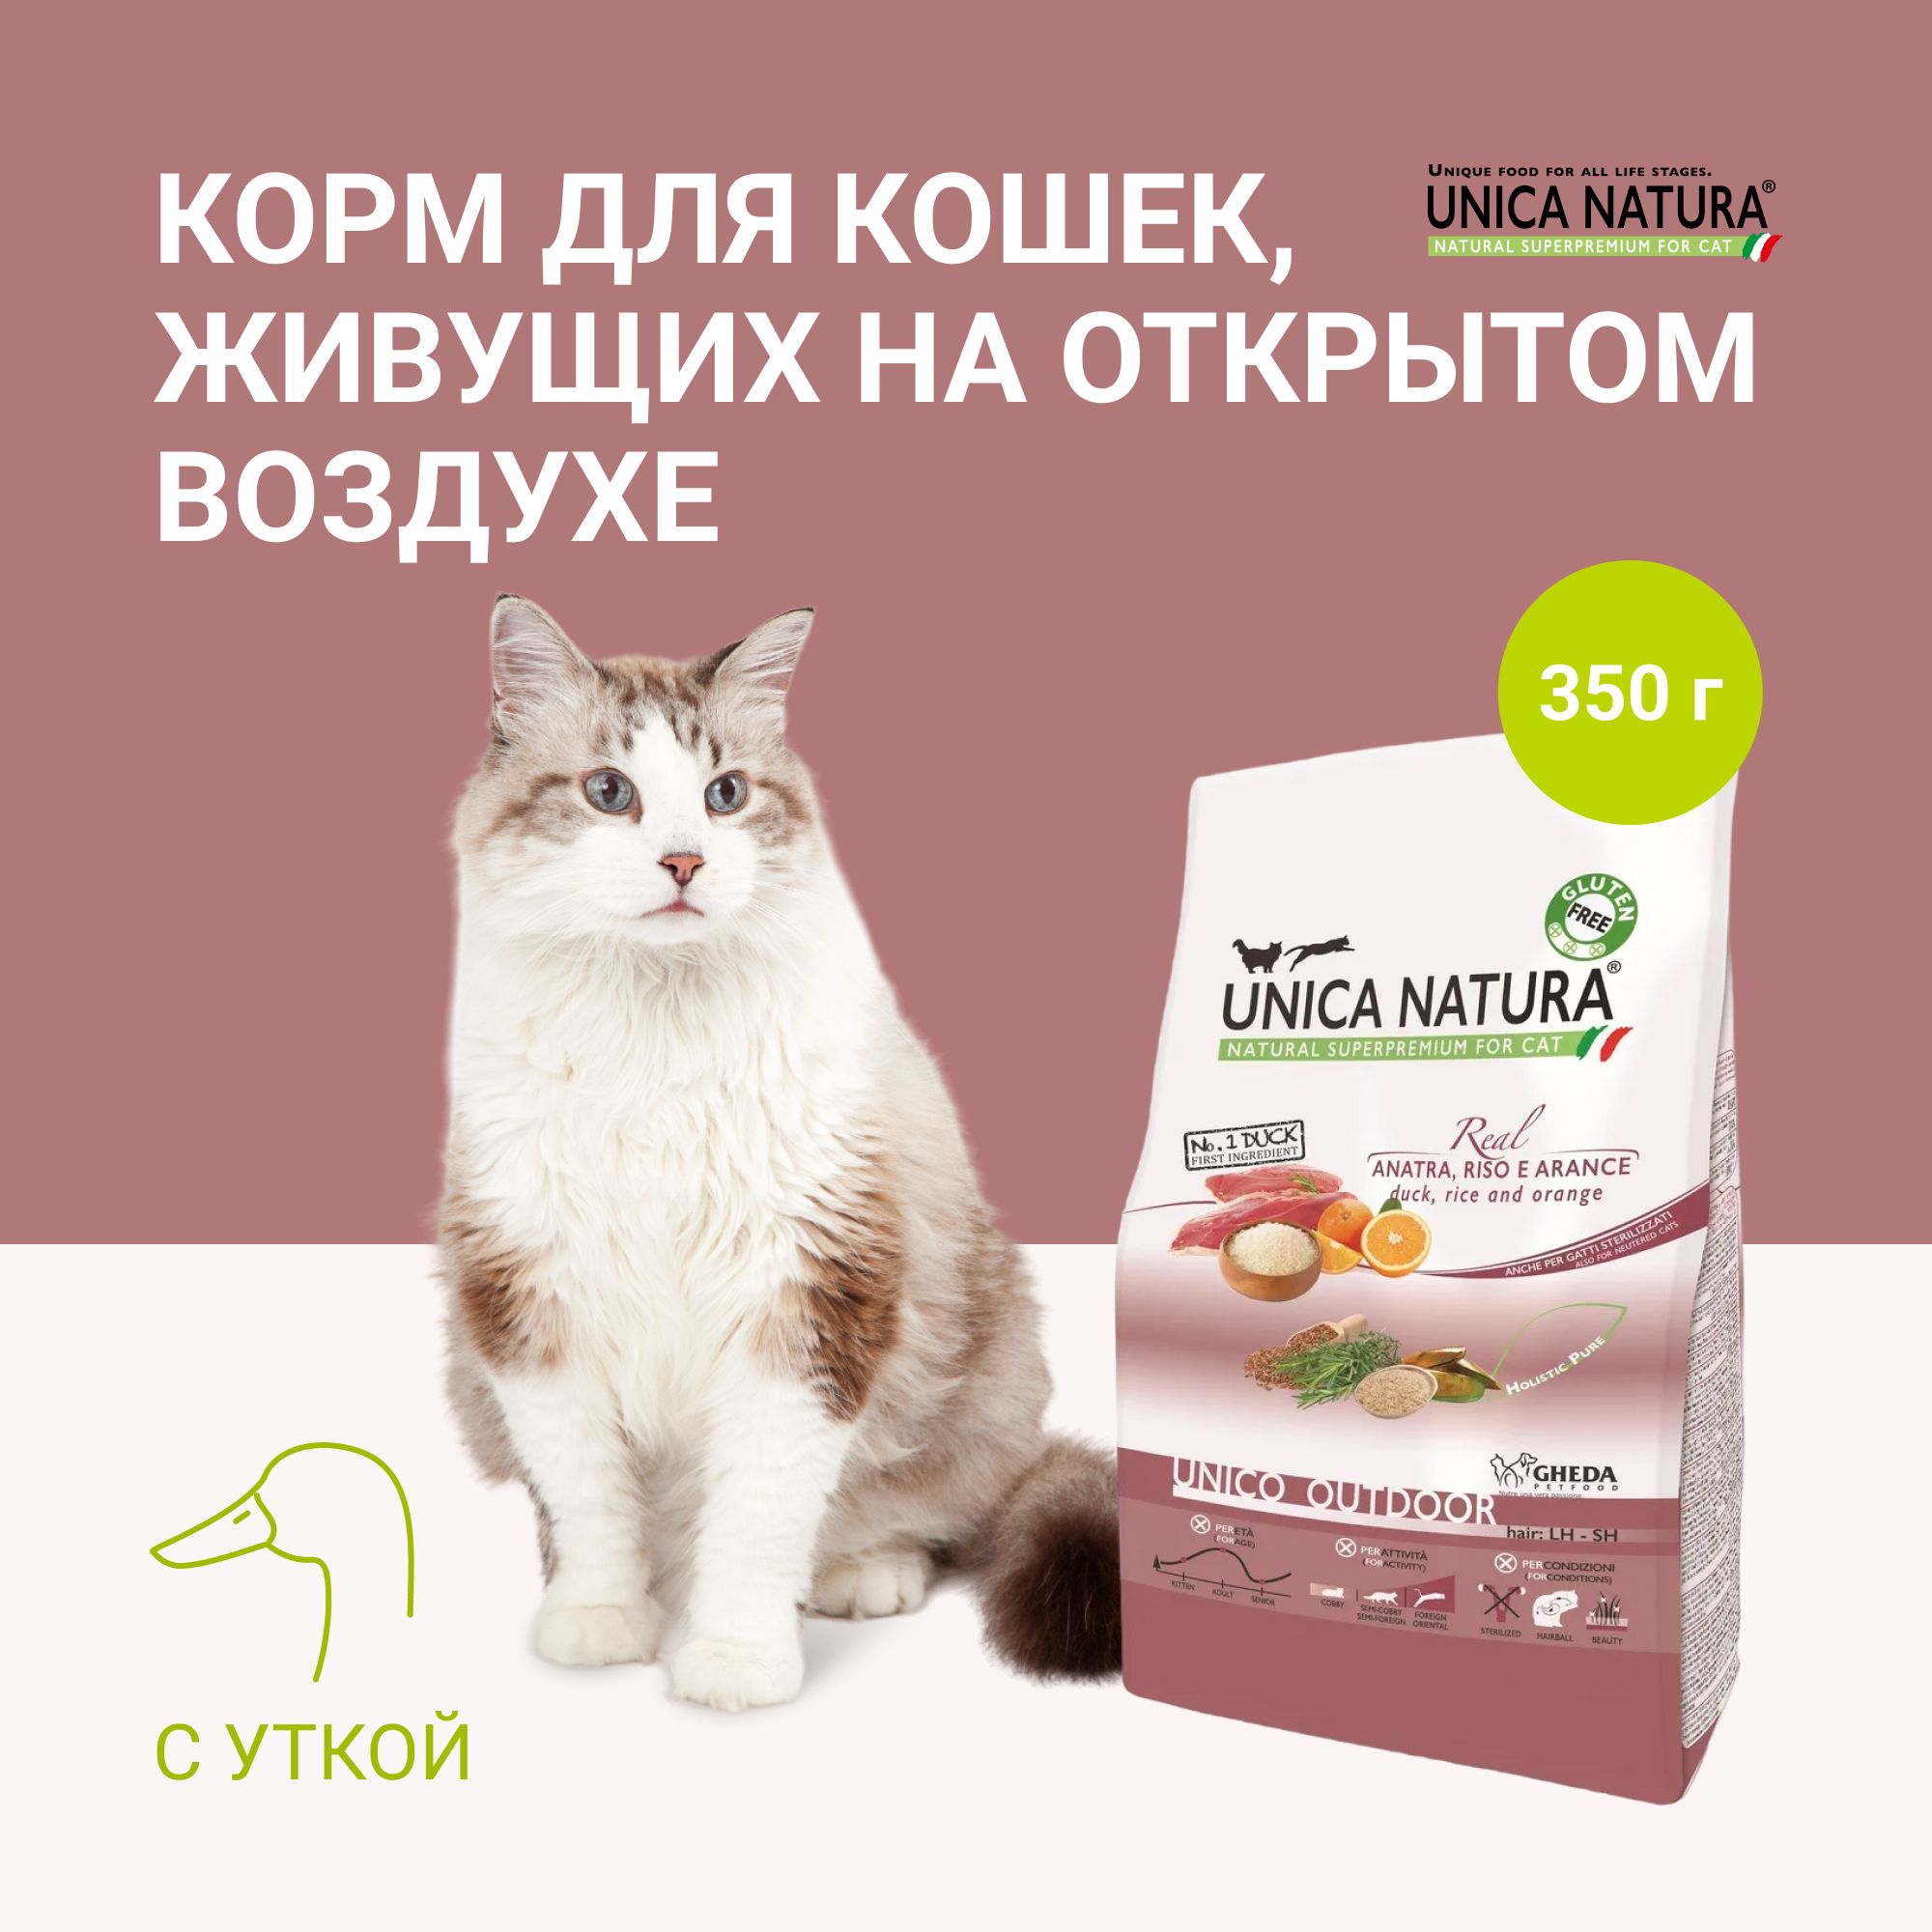 Unica Natura корм для кошек. Алма натура корм для кошек. Спектрум корм для Уника натура для кошек.